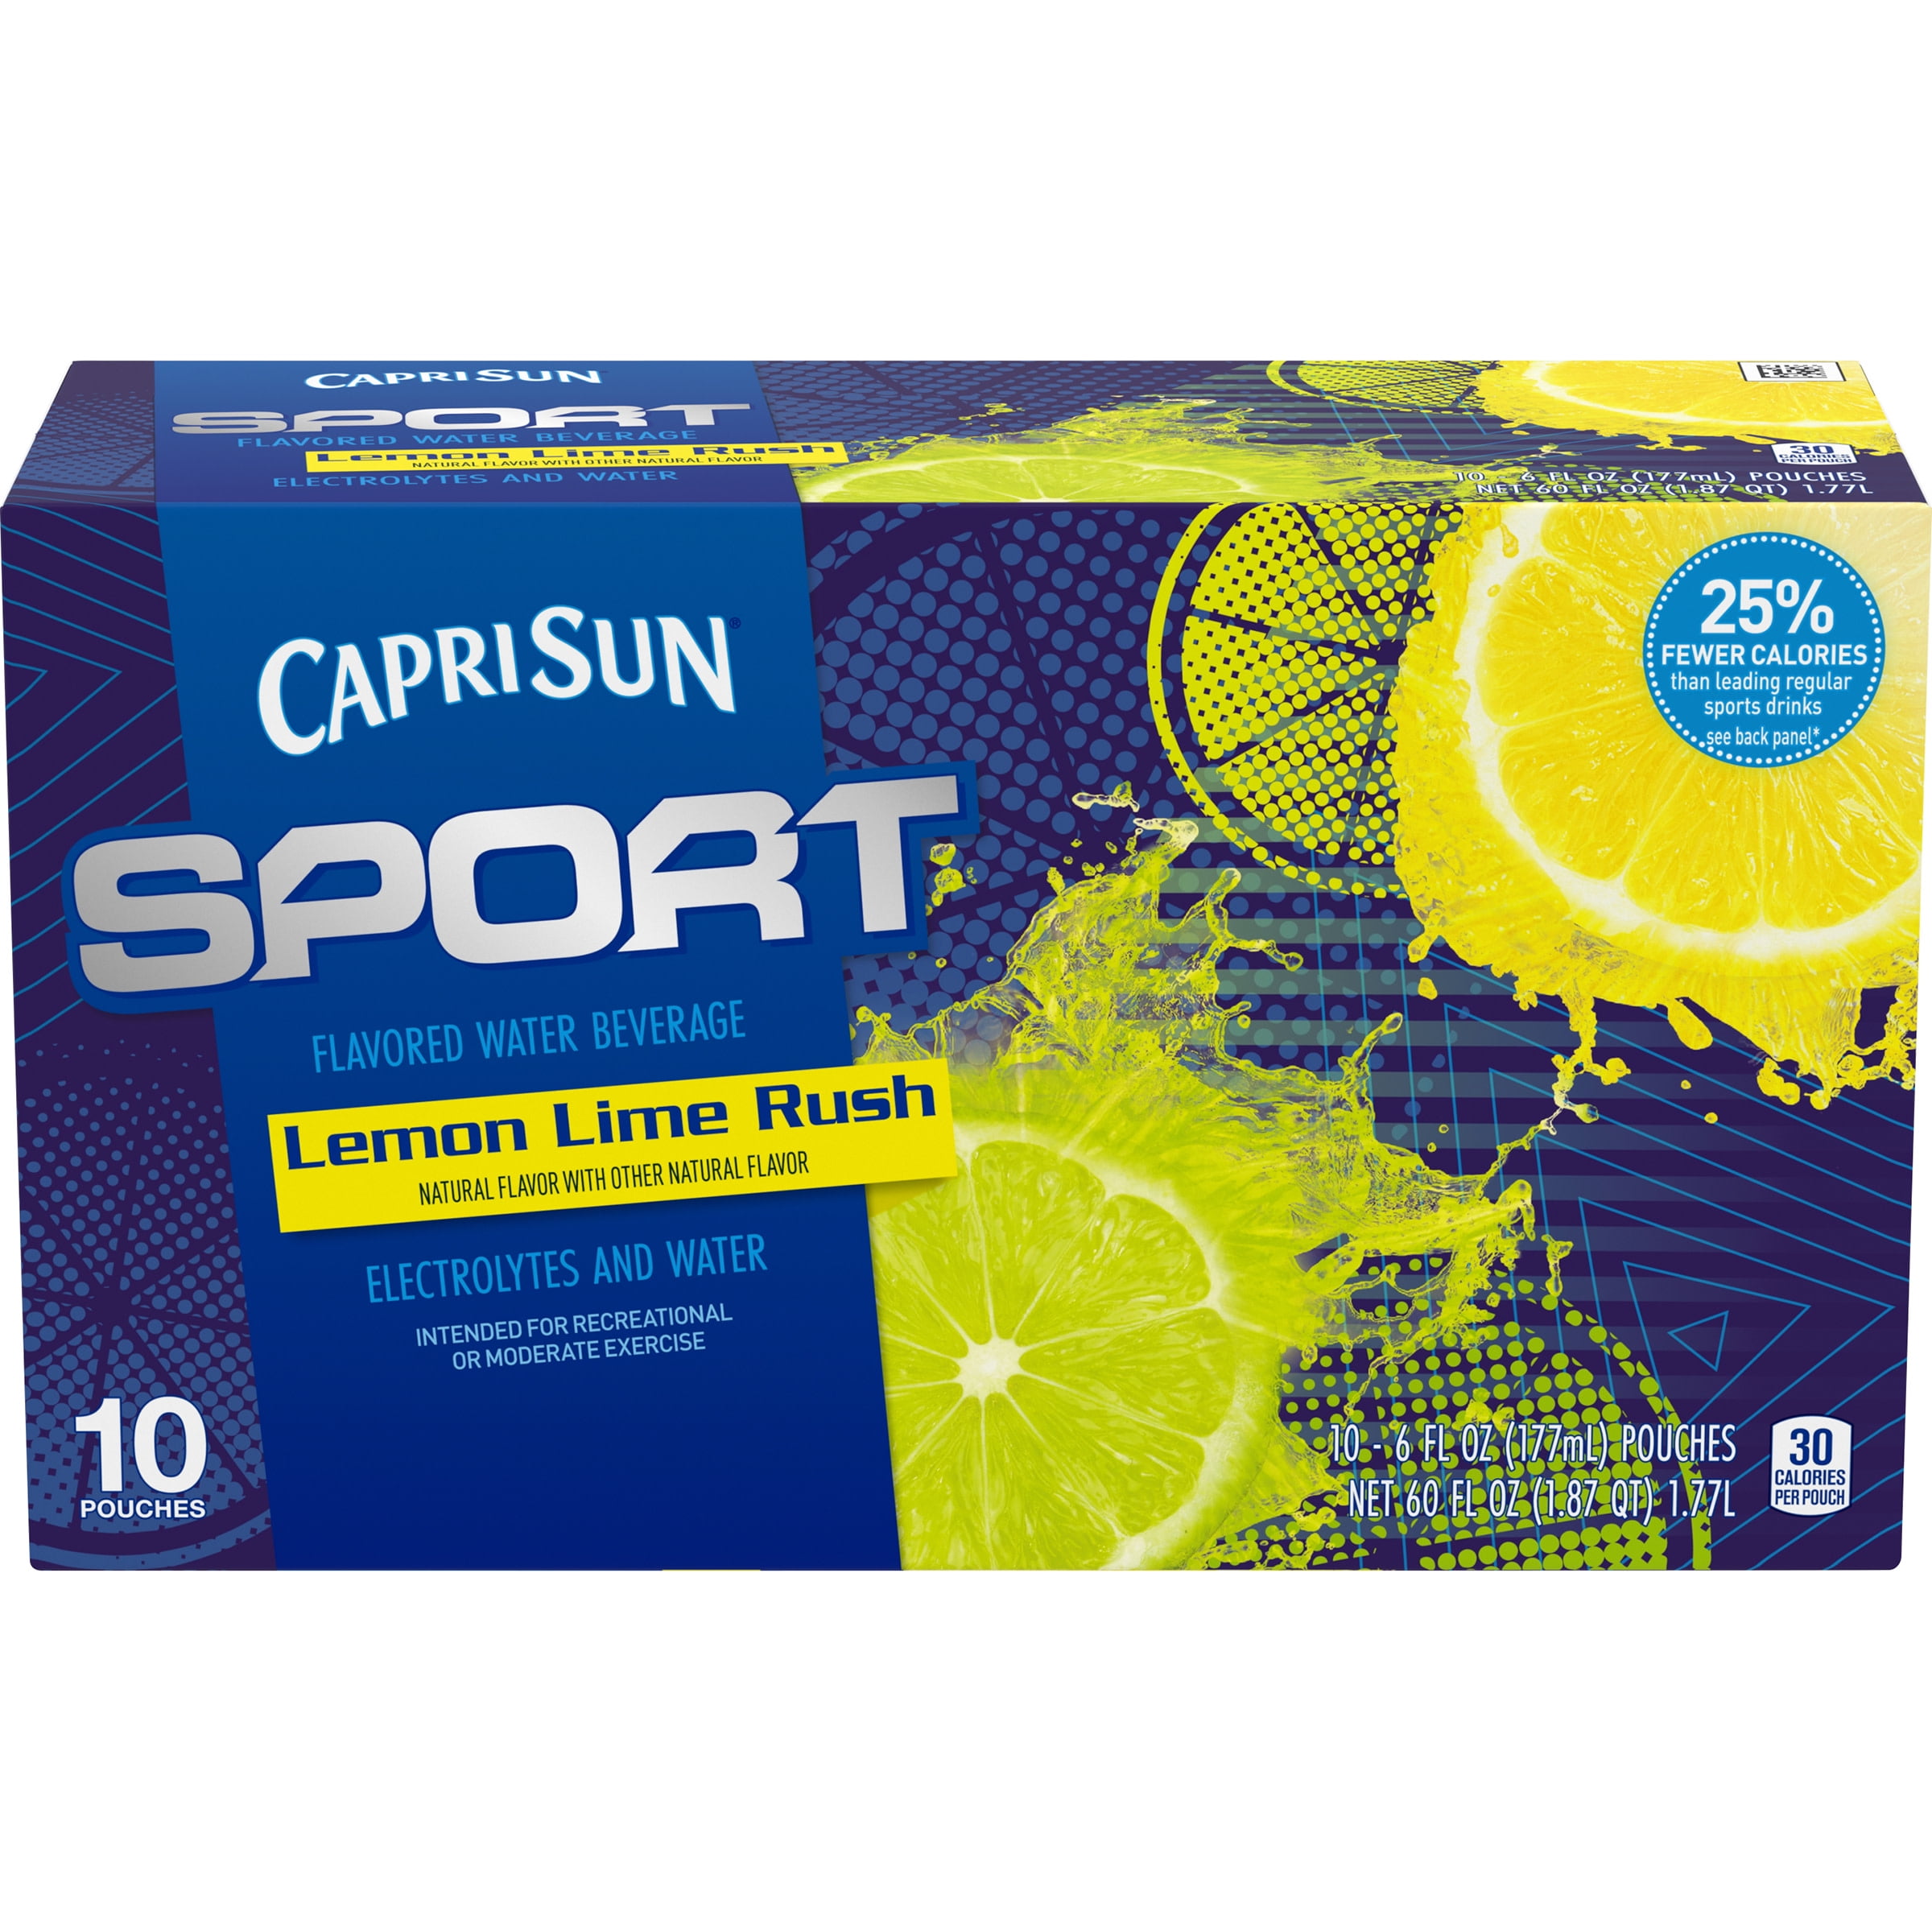 Capri Sun Sport Lemon Lime Rush Flavored Water Beverage, 10 ct - Pouches, 60.0 fl oz Box